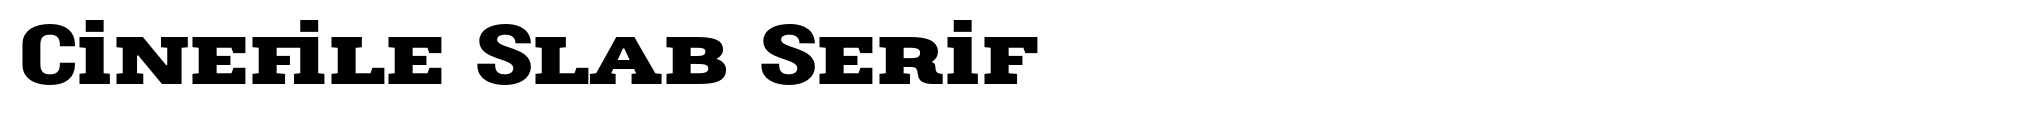 Cinefile Slab Serif image